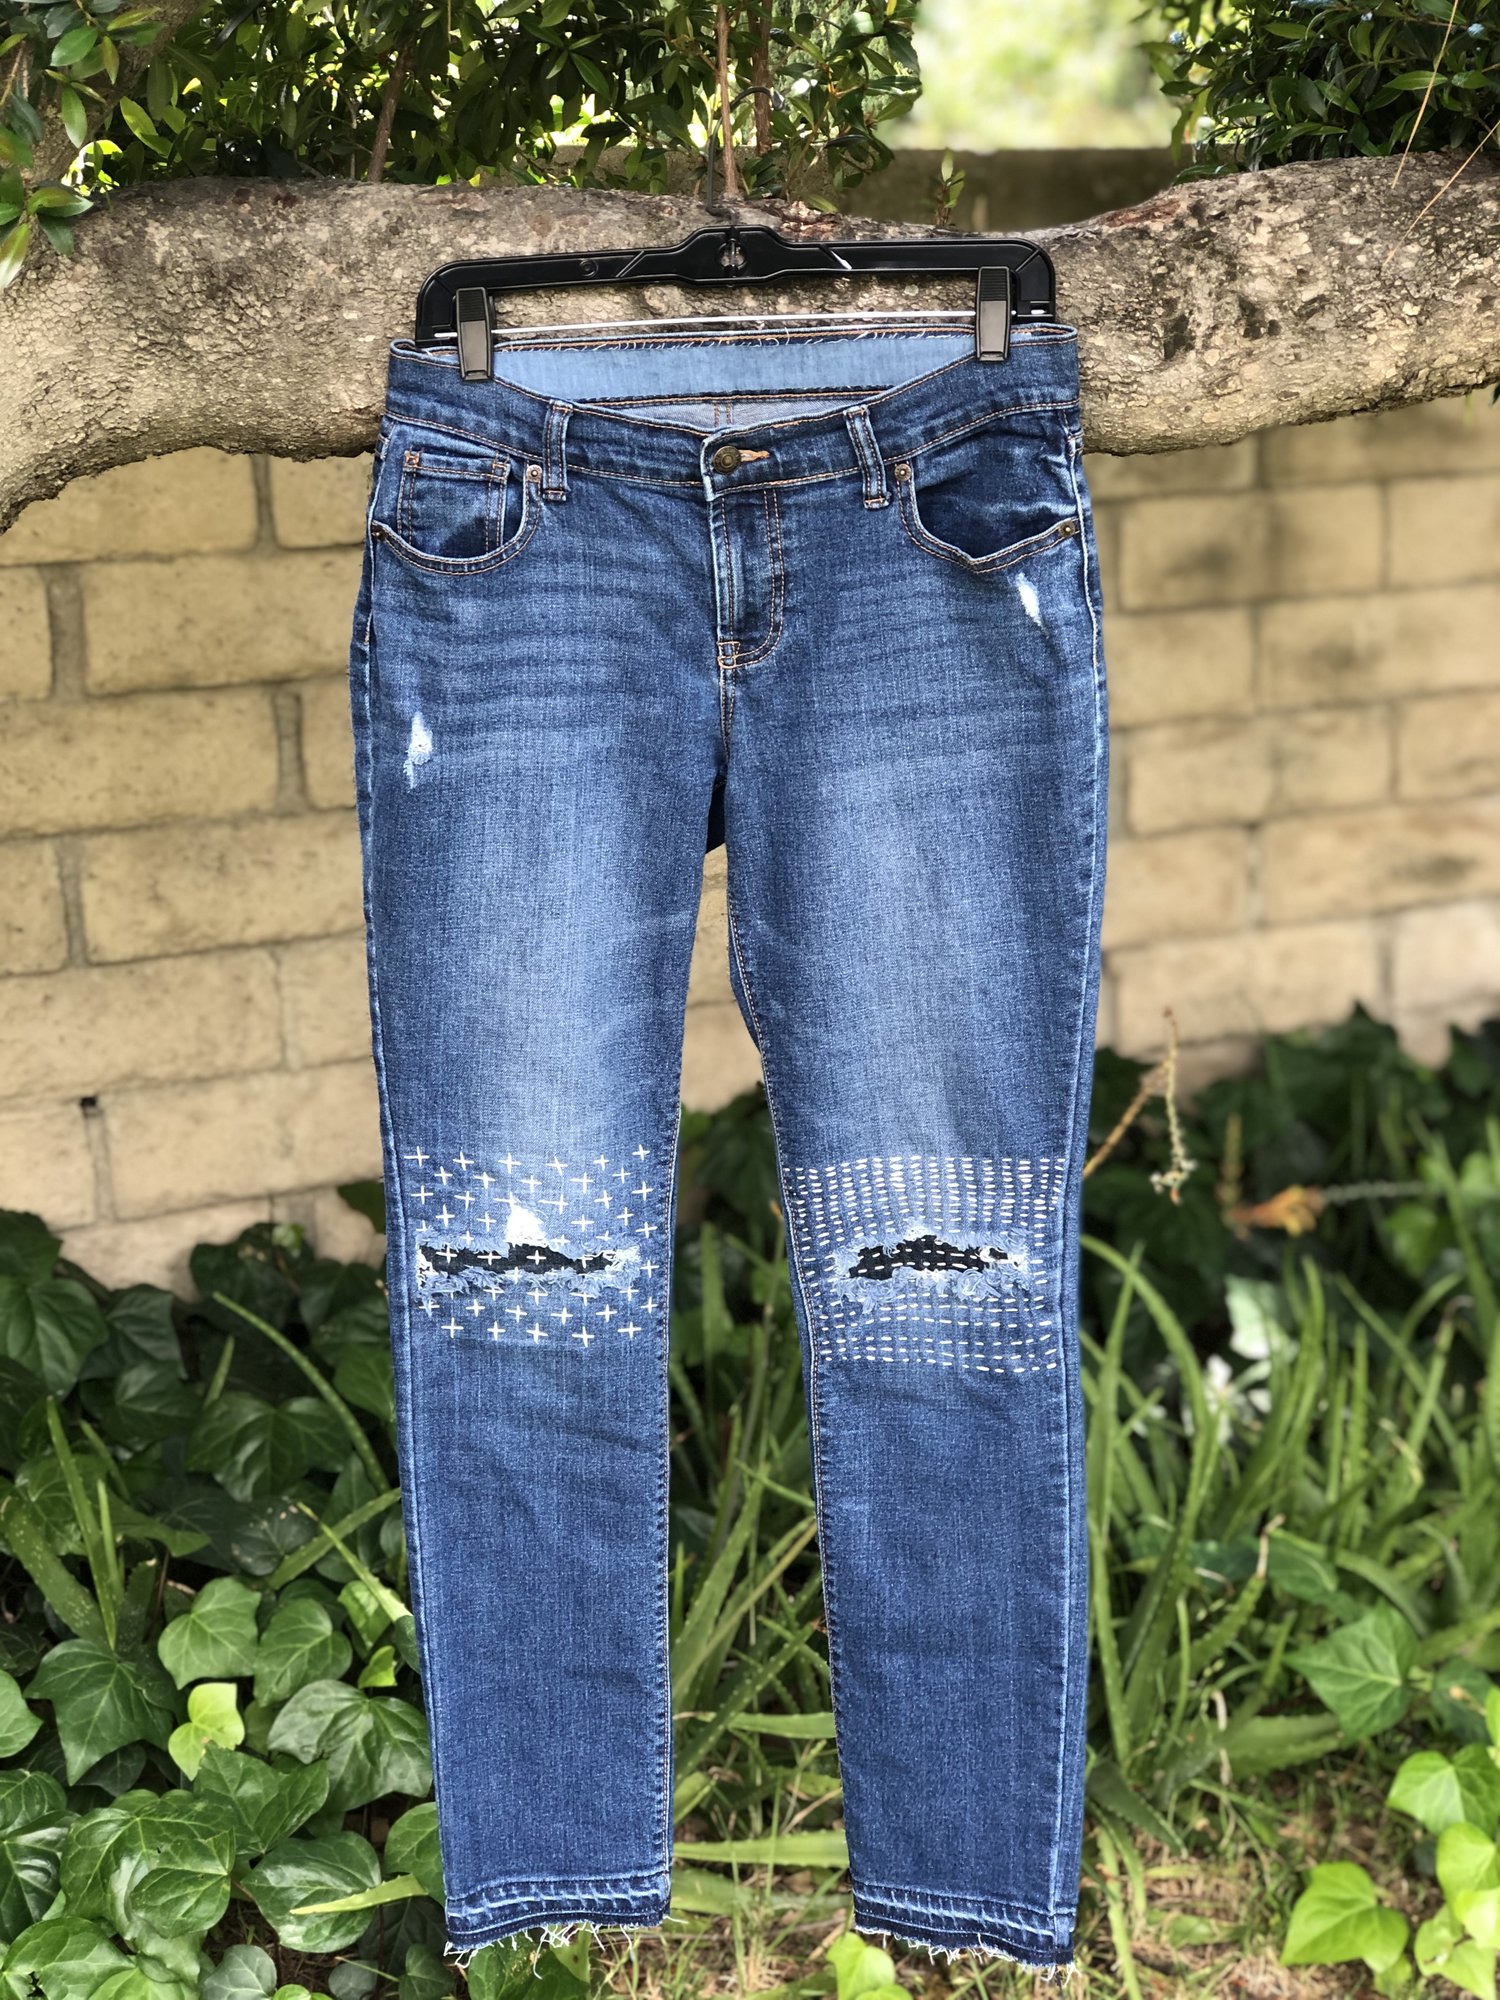 Custom Jeans boro / Upcycled Jeans 